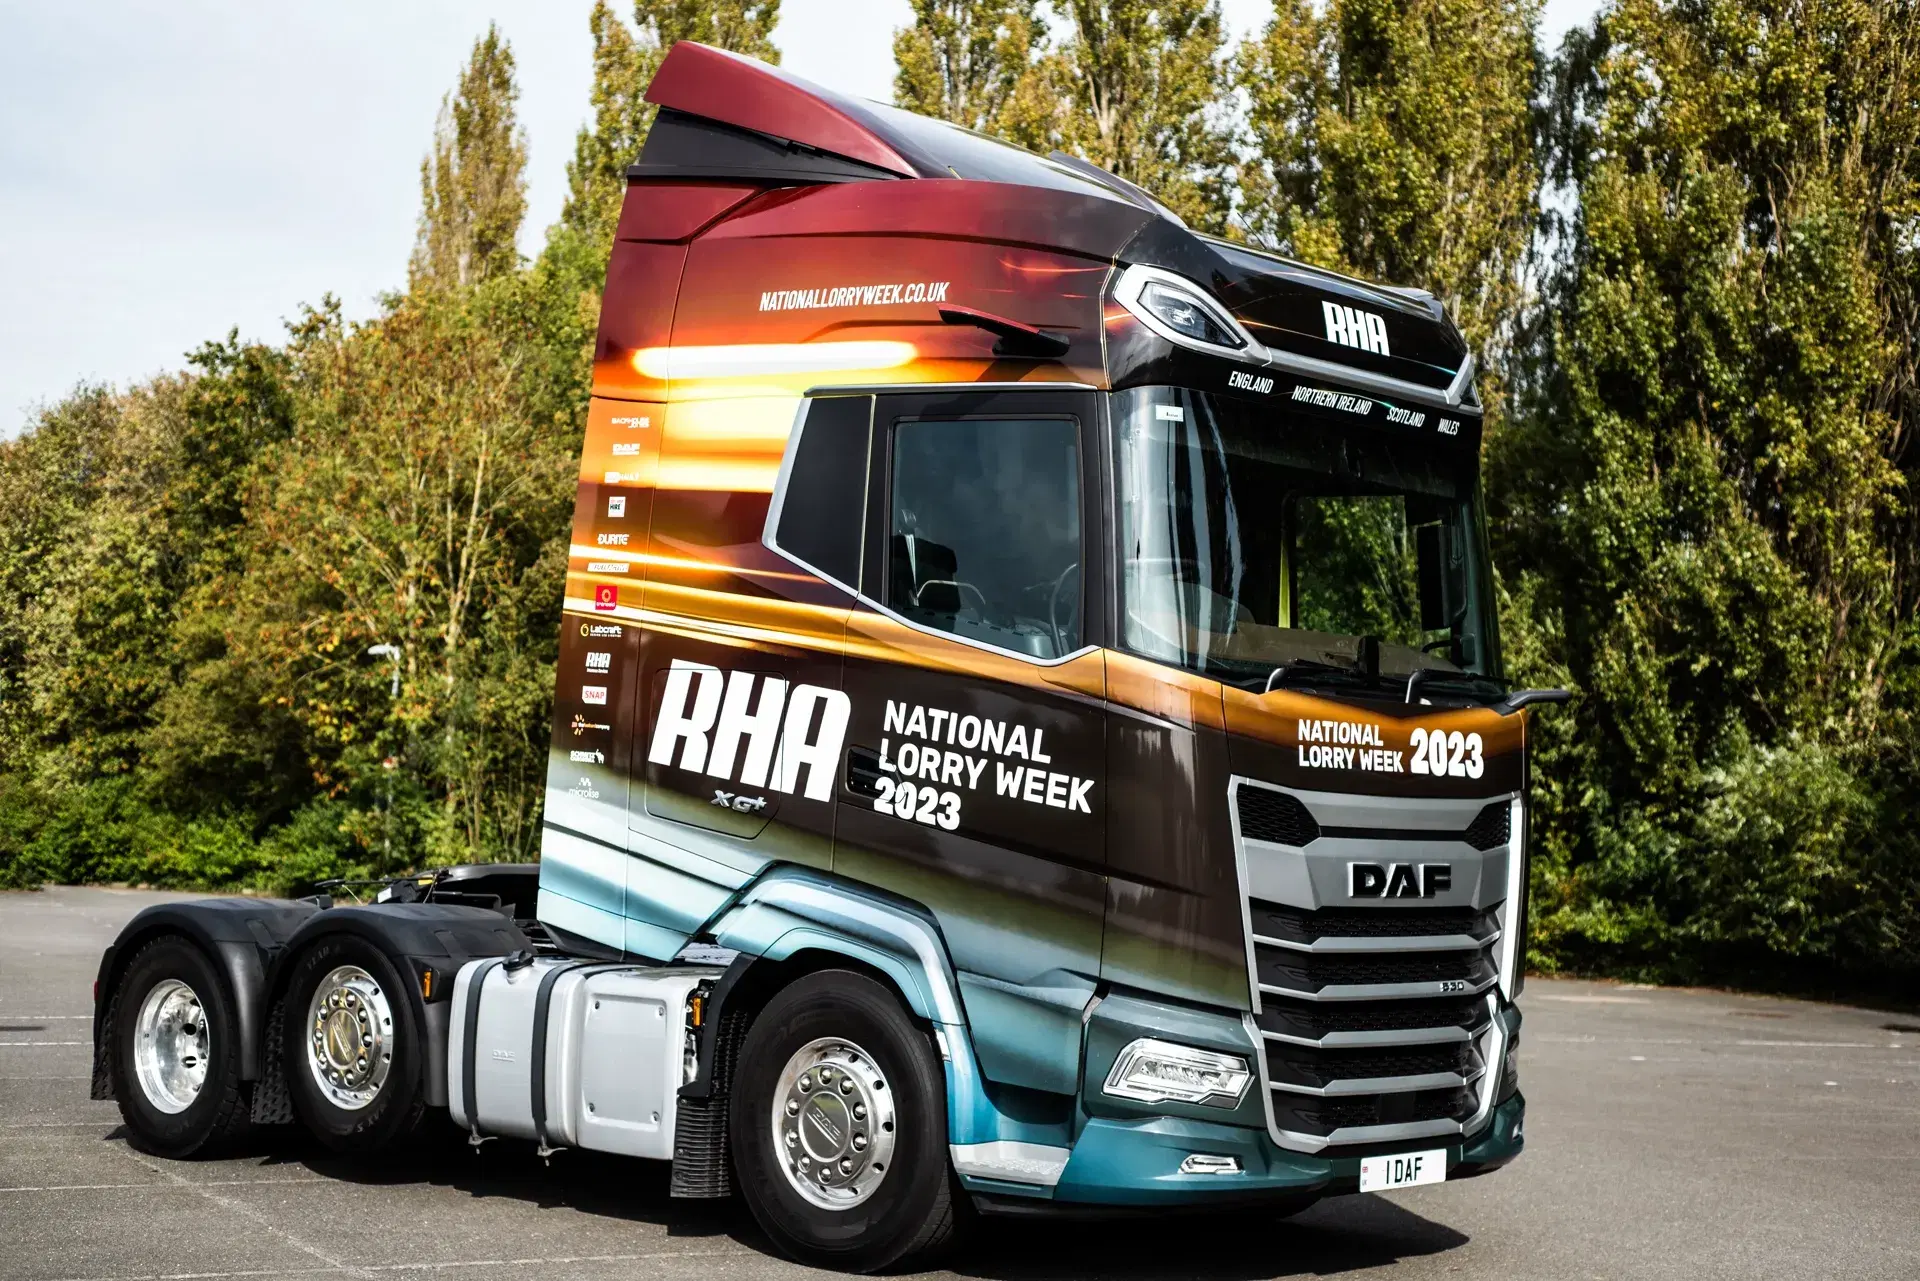 rha national lorry week image 3